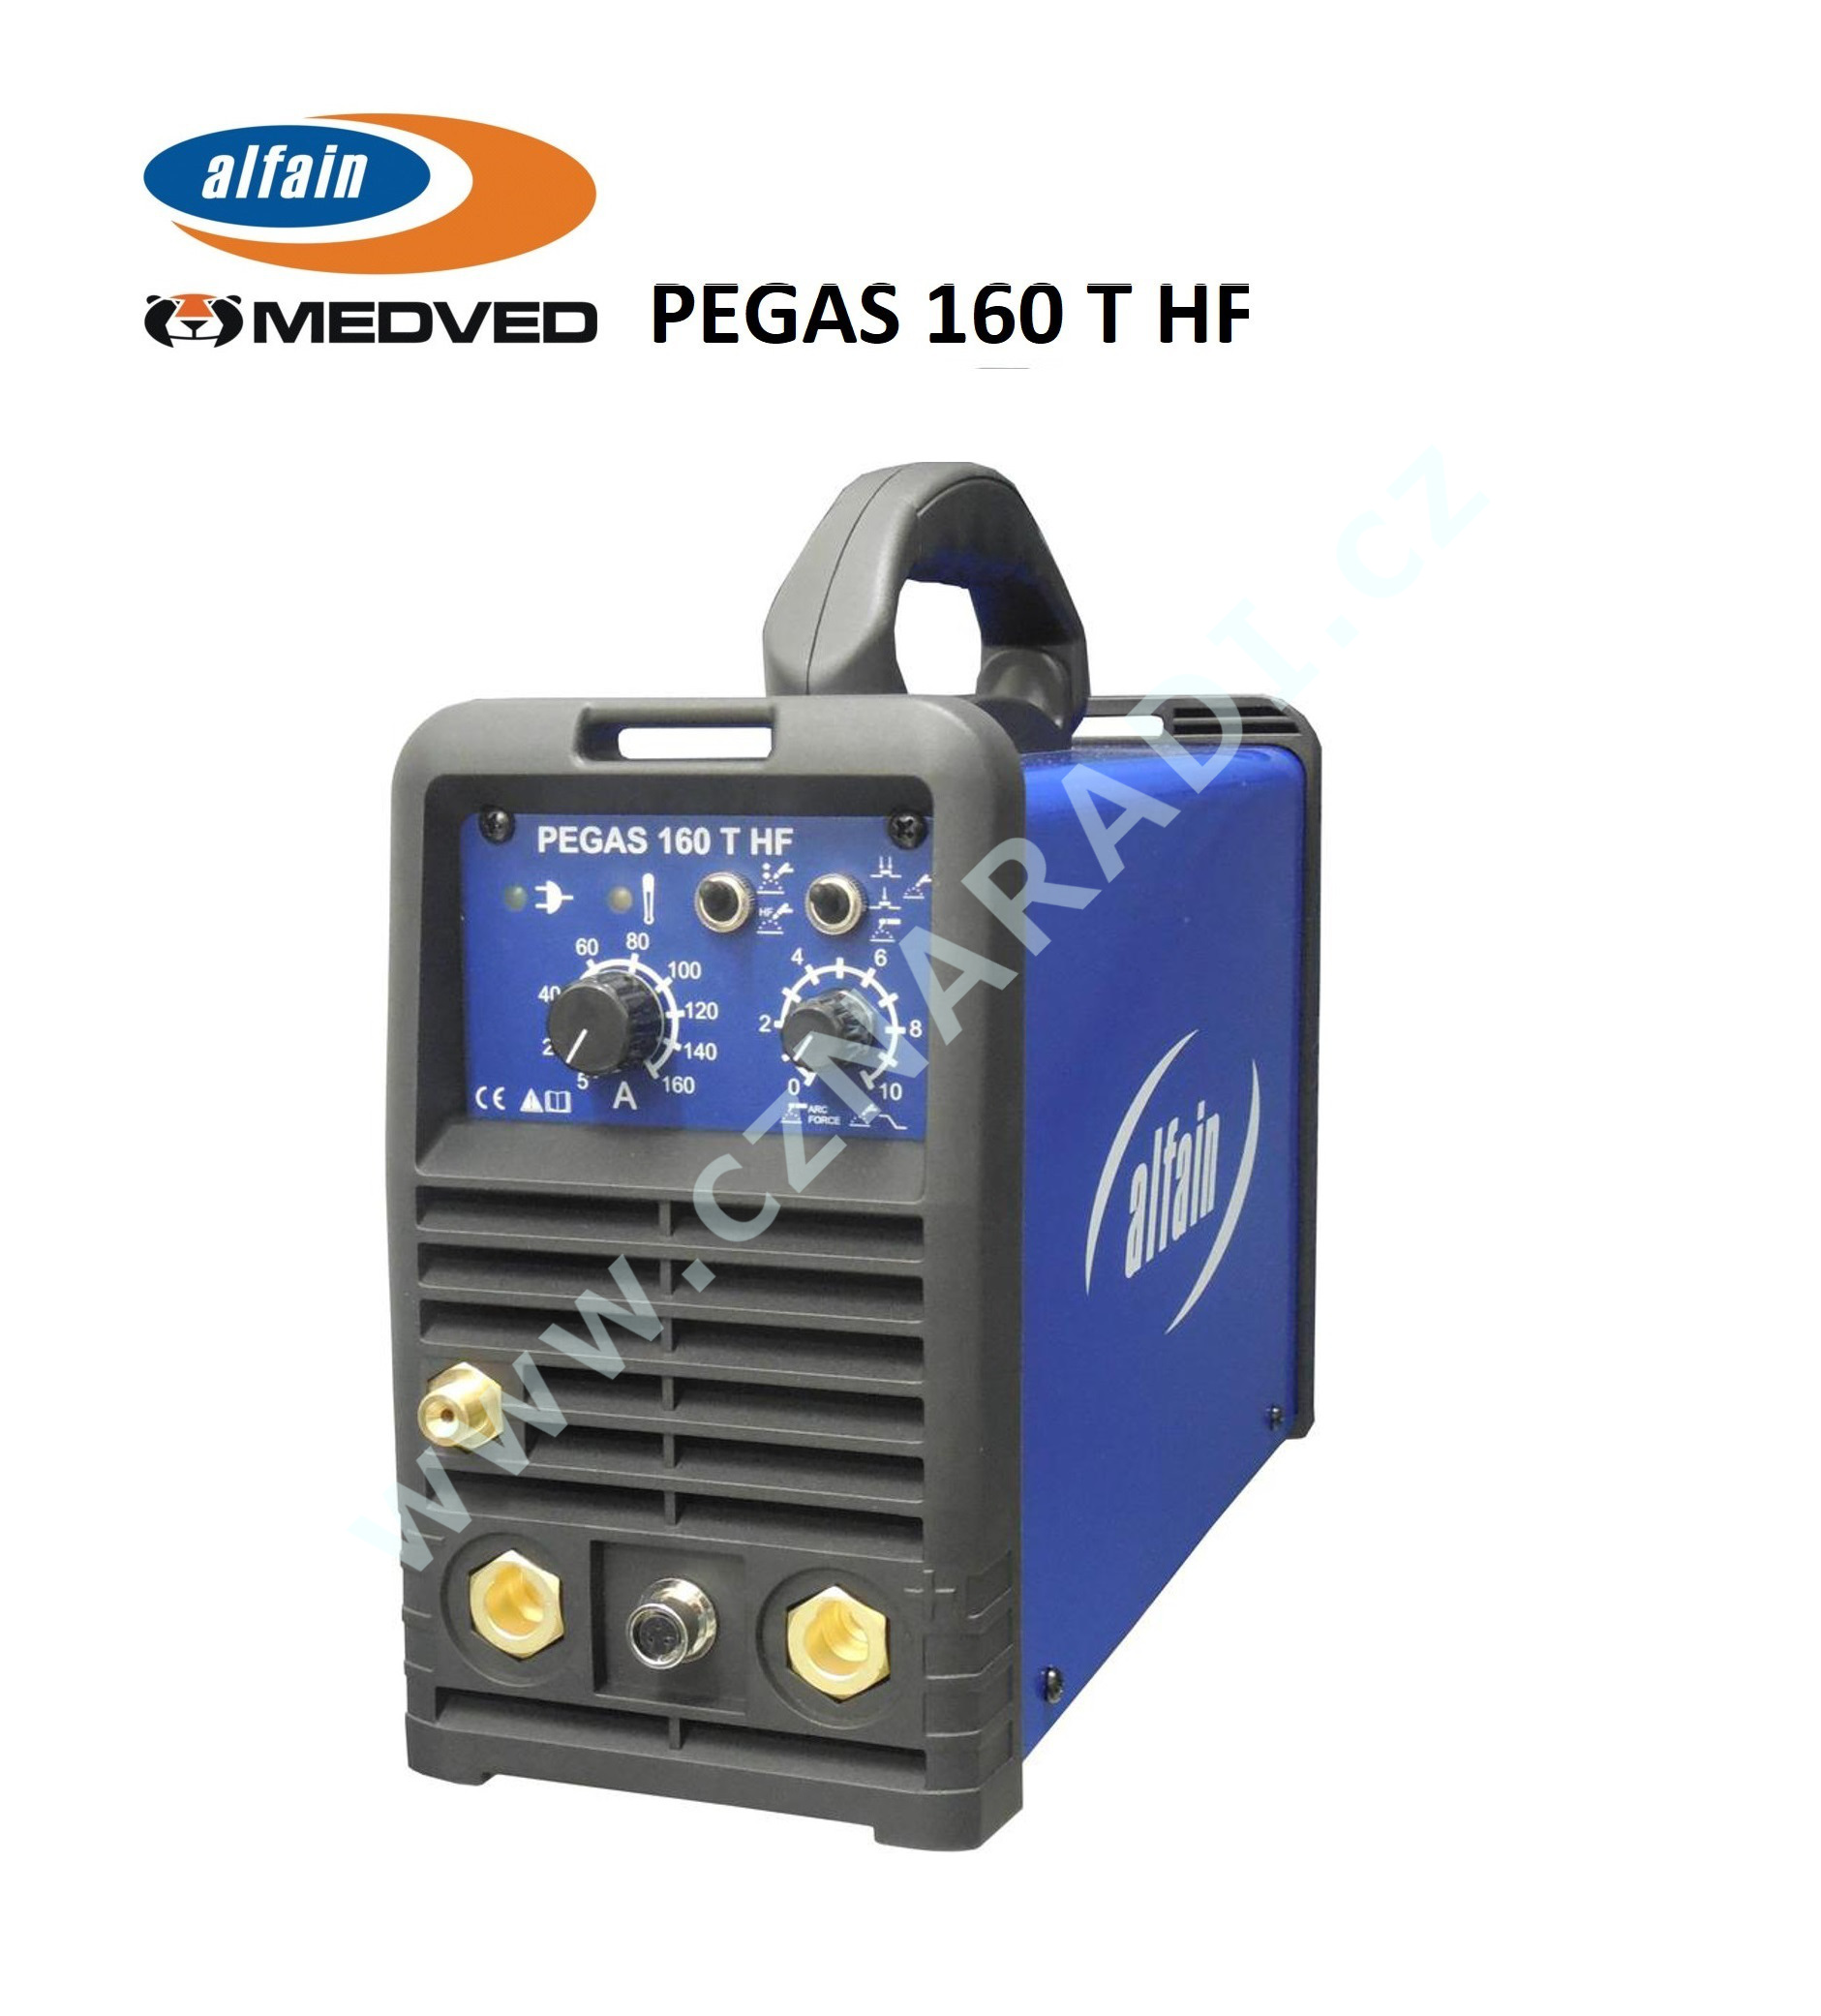 PEGAS 160 T HF, svářečka Alfa in,  5.0112-1